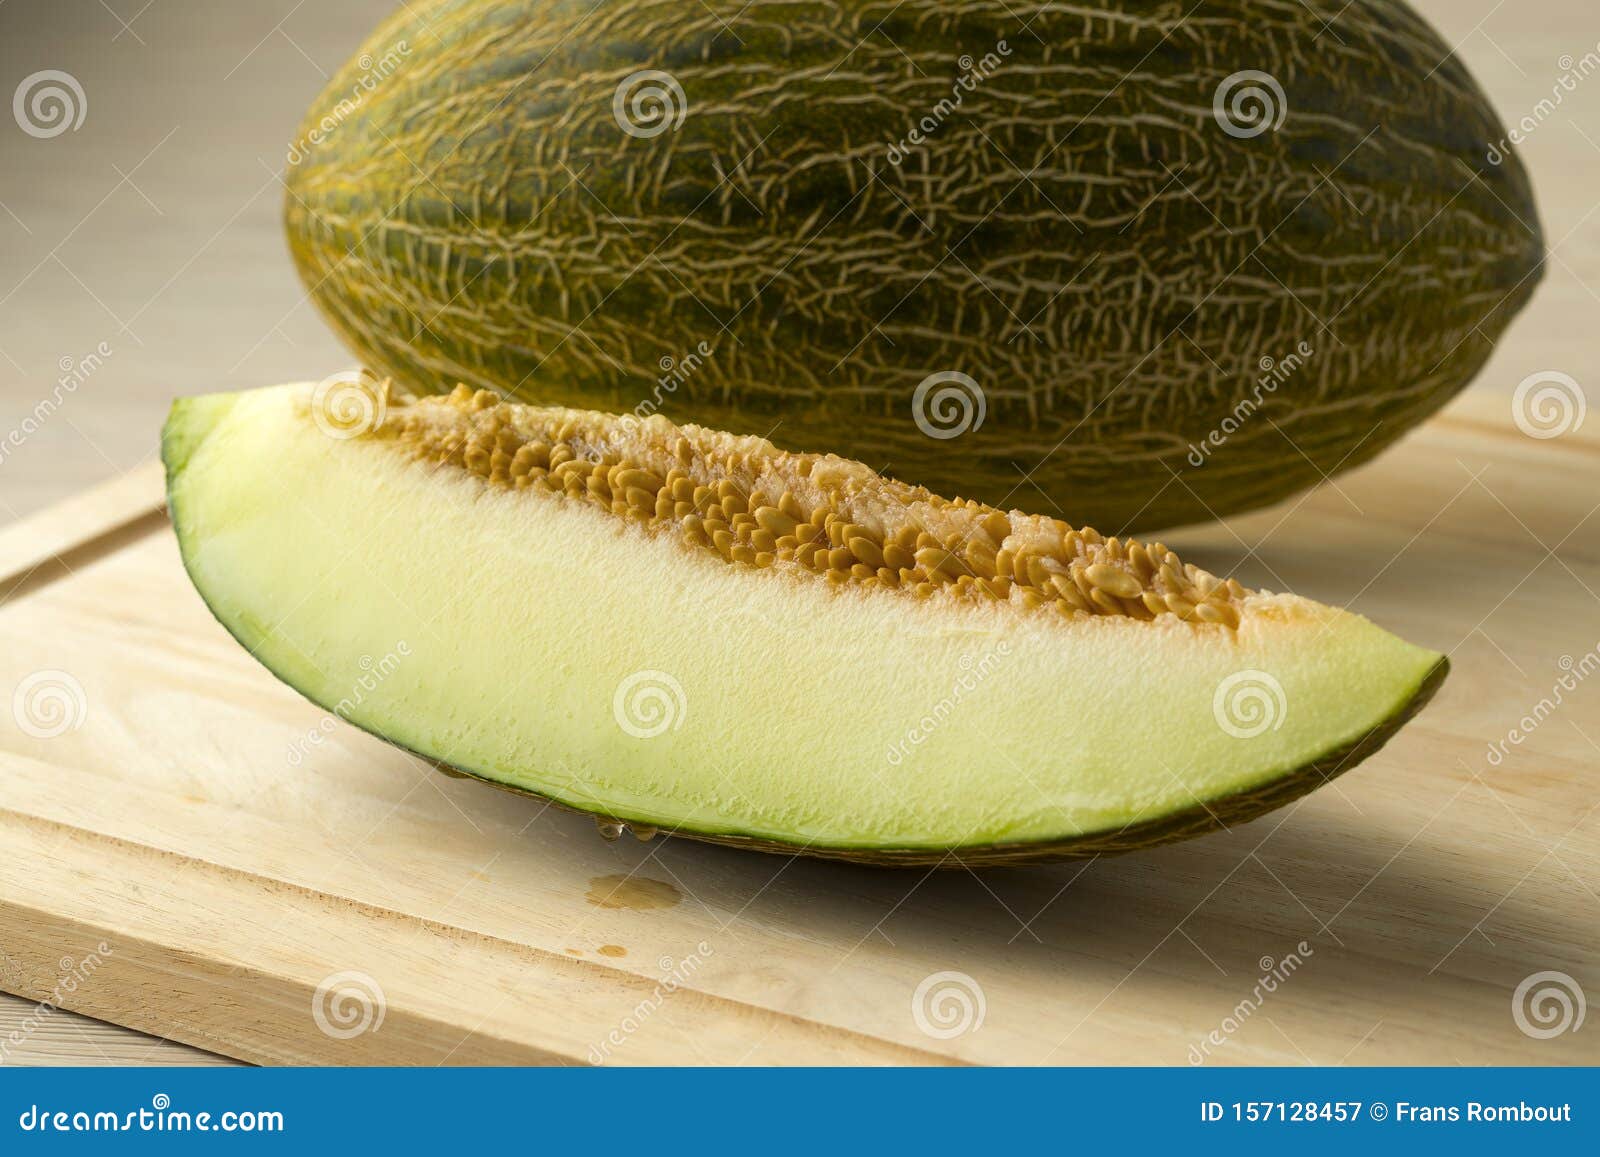 piece of piel de sapo melon close up